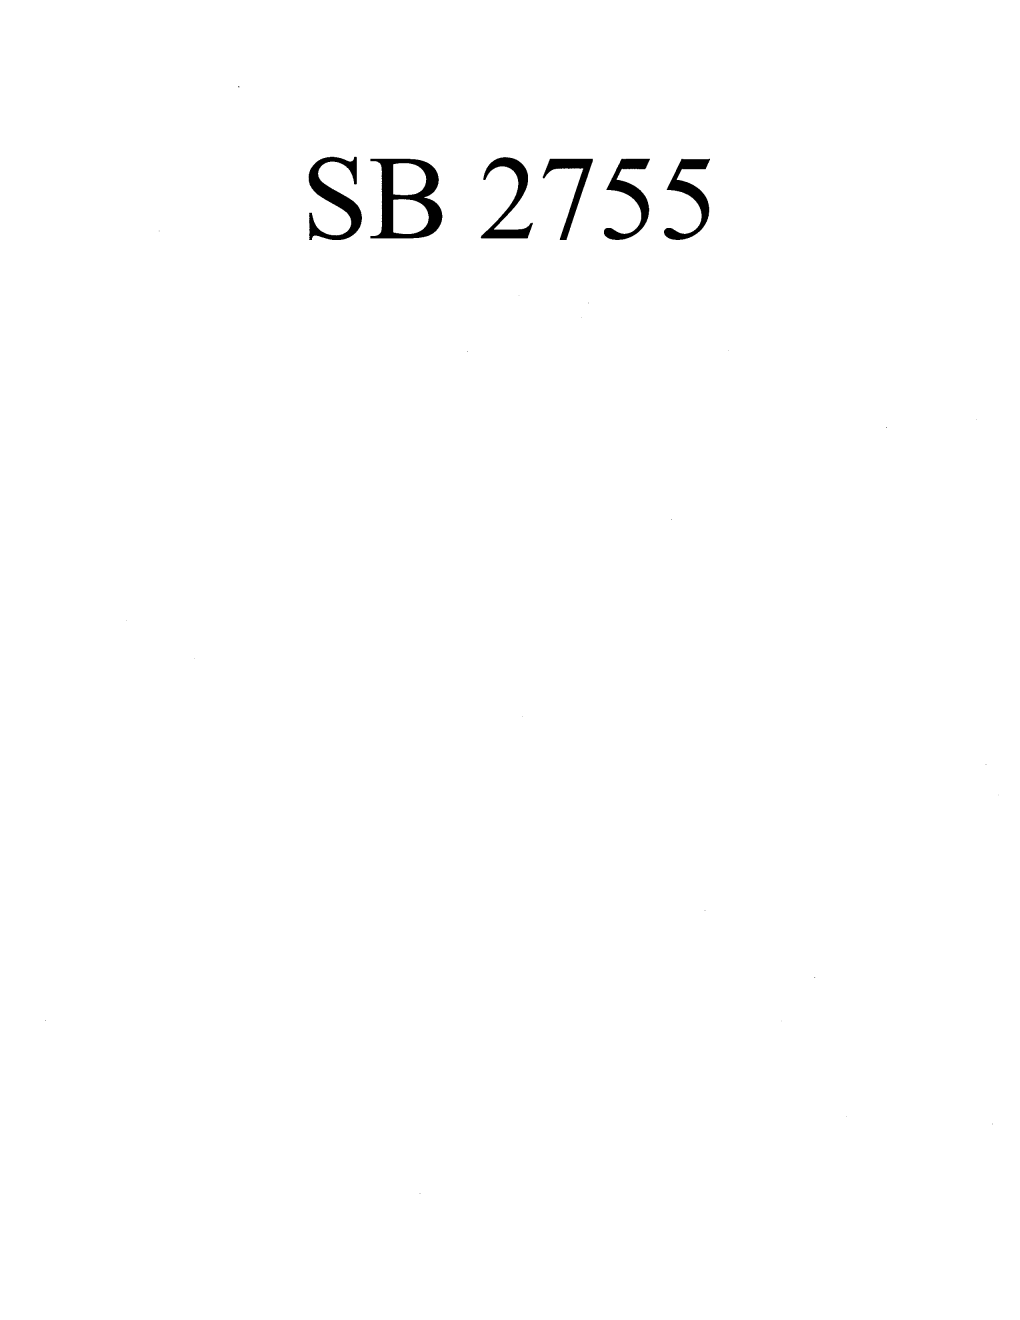 SB 2755 LINDA LINGLE Brennan T